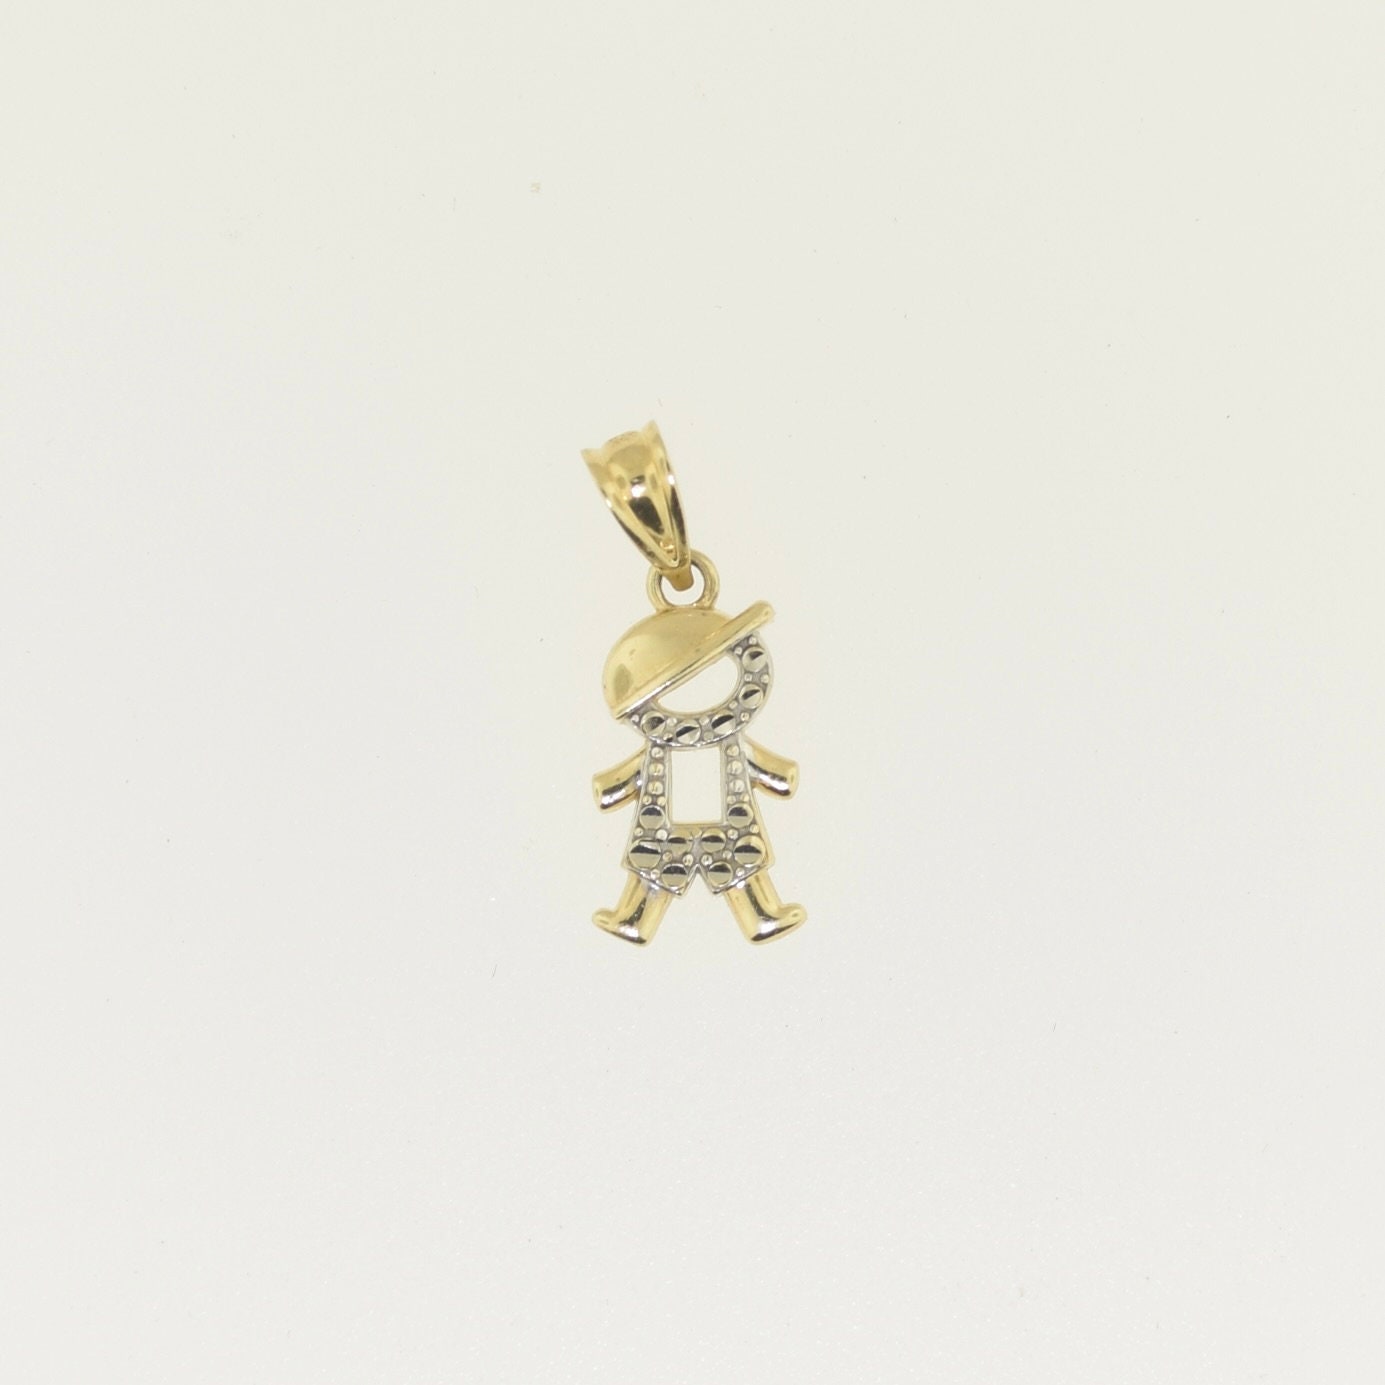 10k Little Boy Charm Vintage Yellow Gold Diamond Cut Pendant